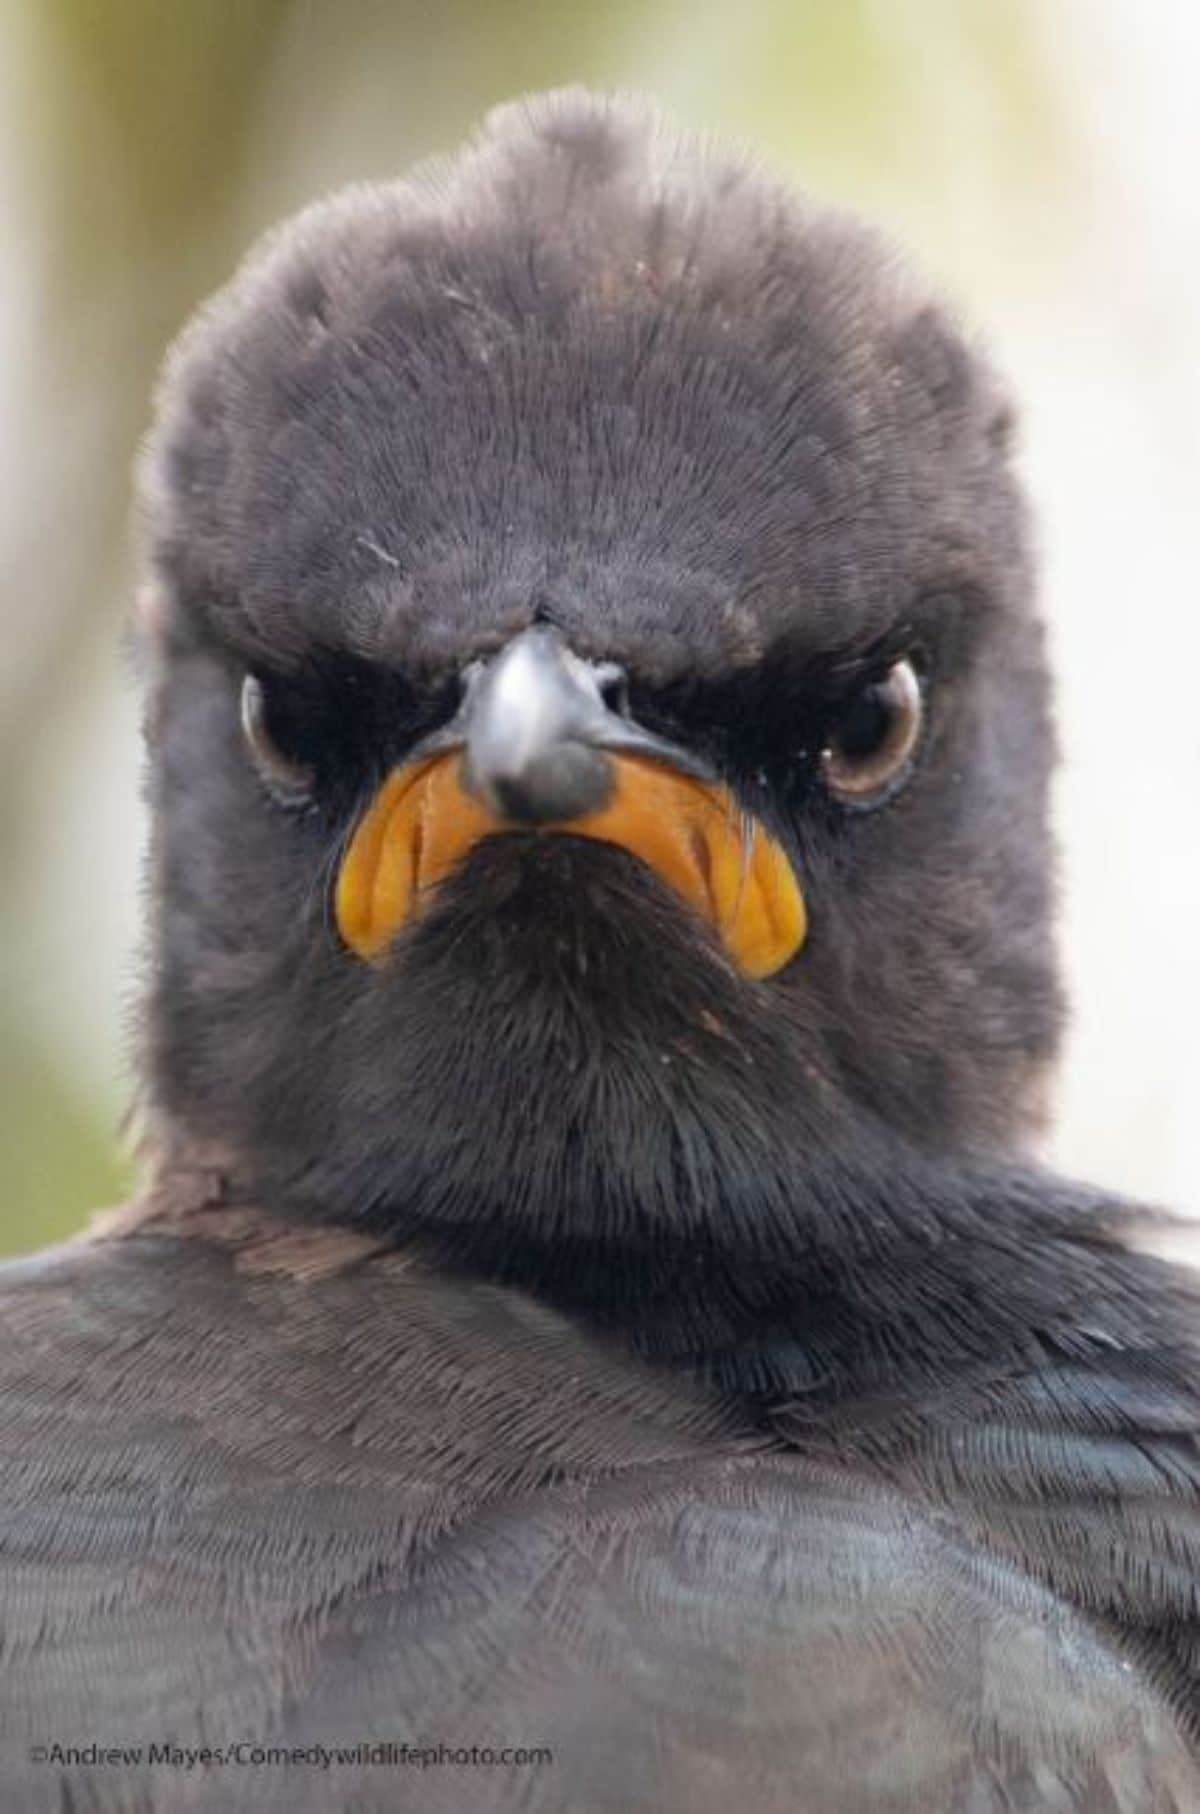 angry grey baby bird with an orange beak looking grumpy